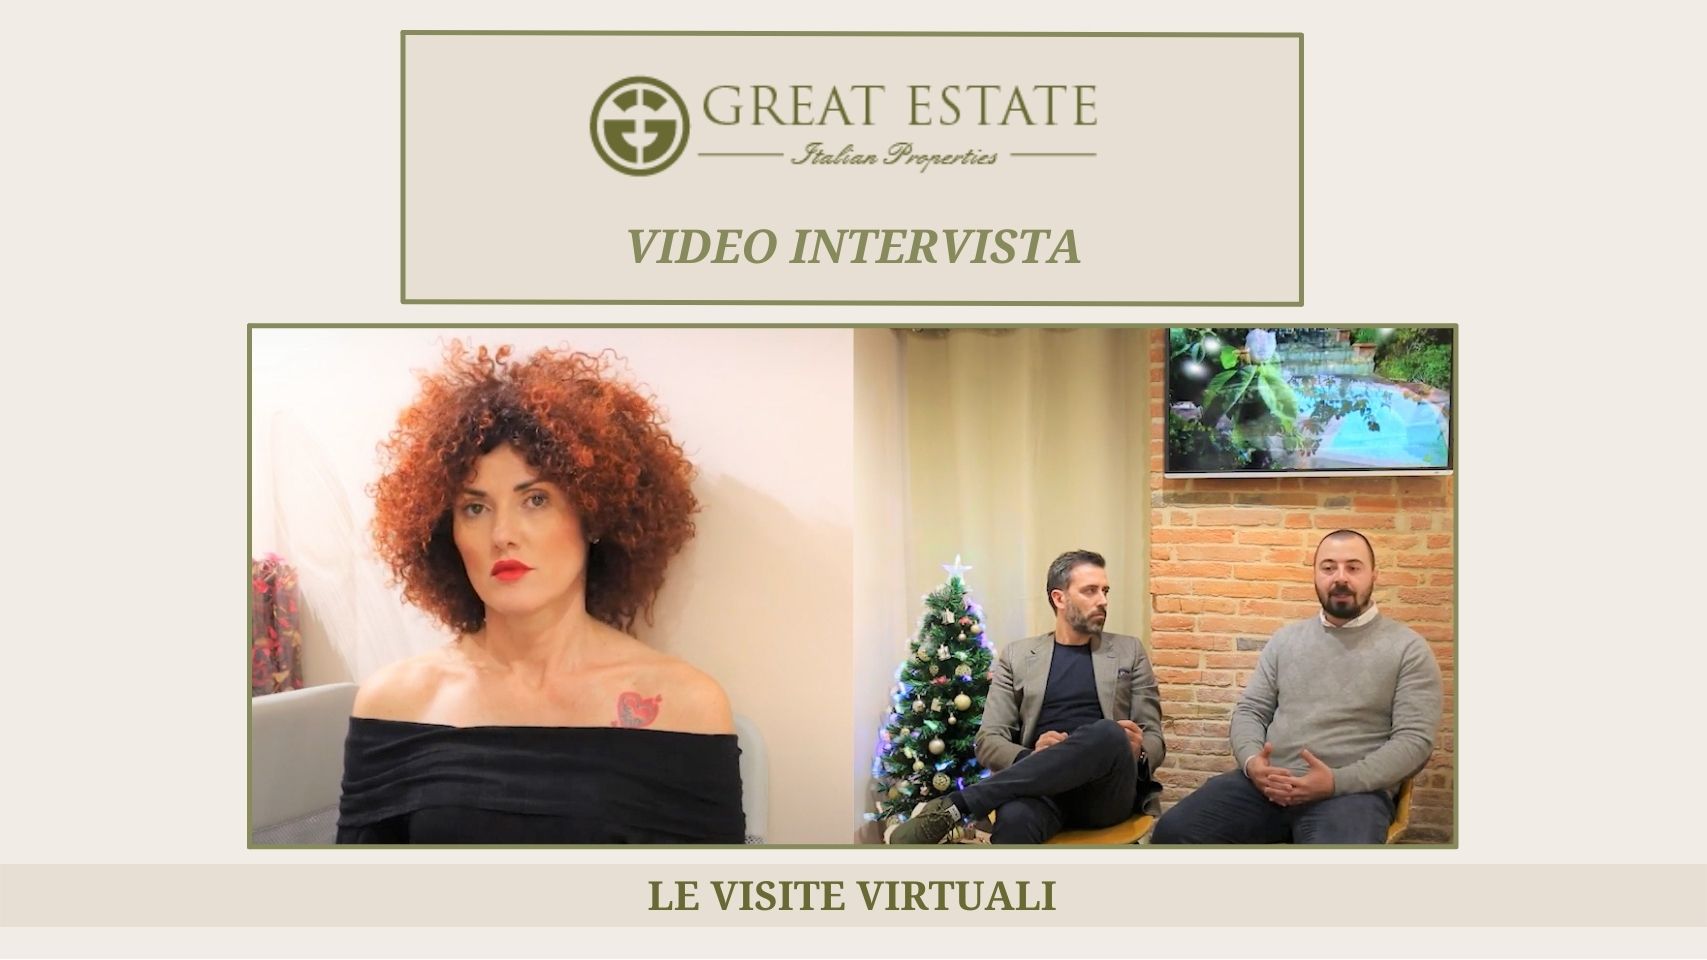 VIDEO INTERVISTA, rolling hills italy, partner network great estate